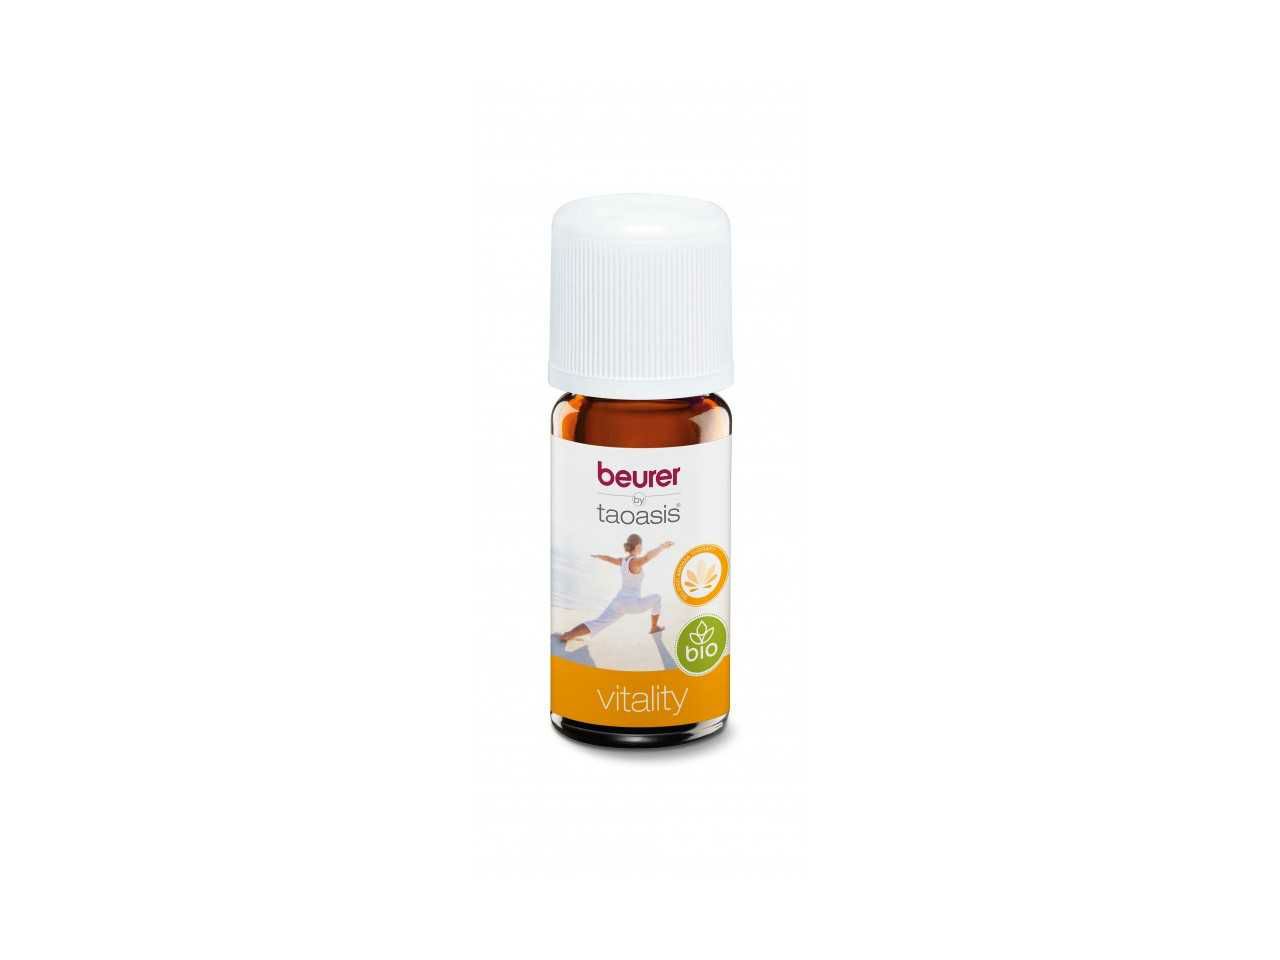 beurer-vitality-aromatsko-ulje-topivo-u-vodi-68130_1.jpg